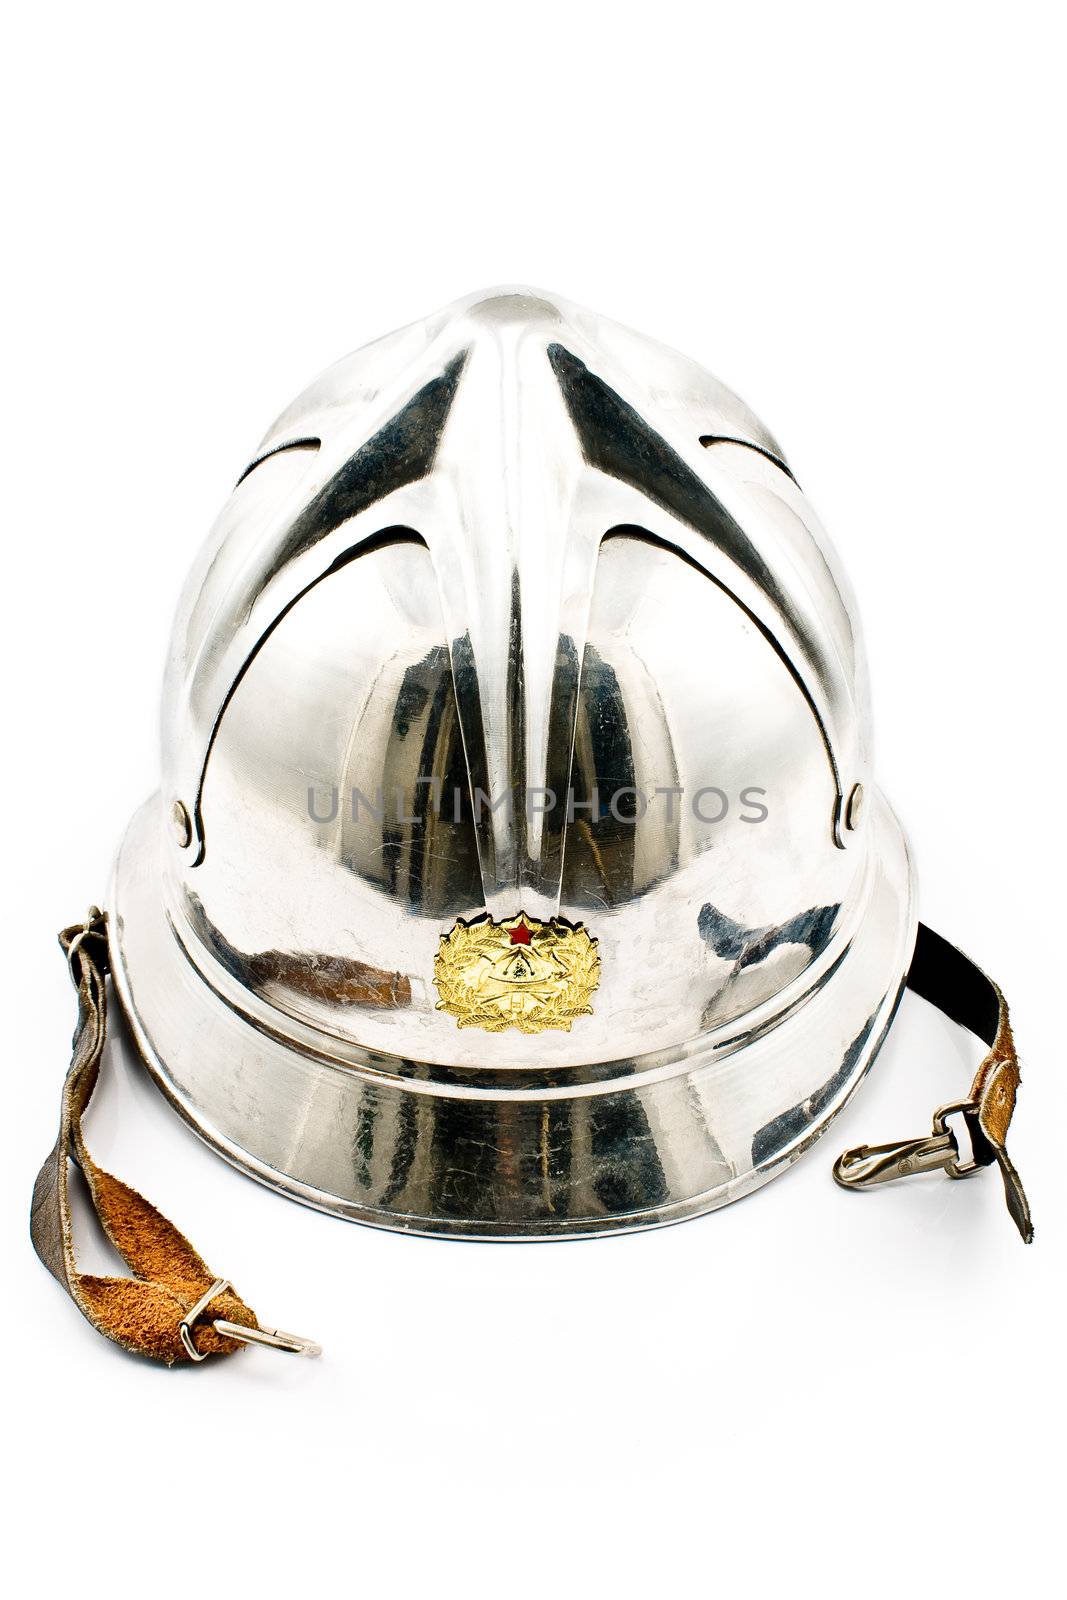 Old fireman's metallic helmet isolated on white